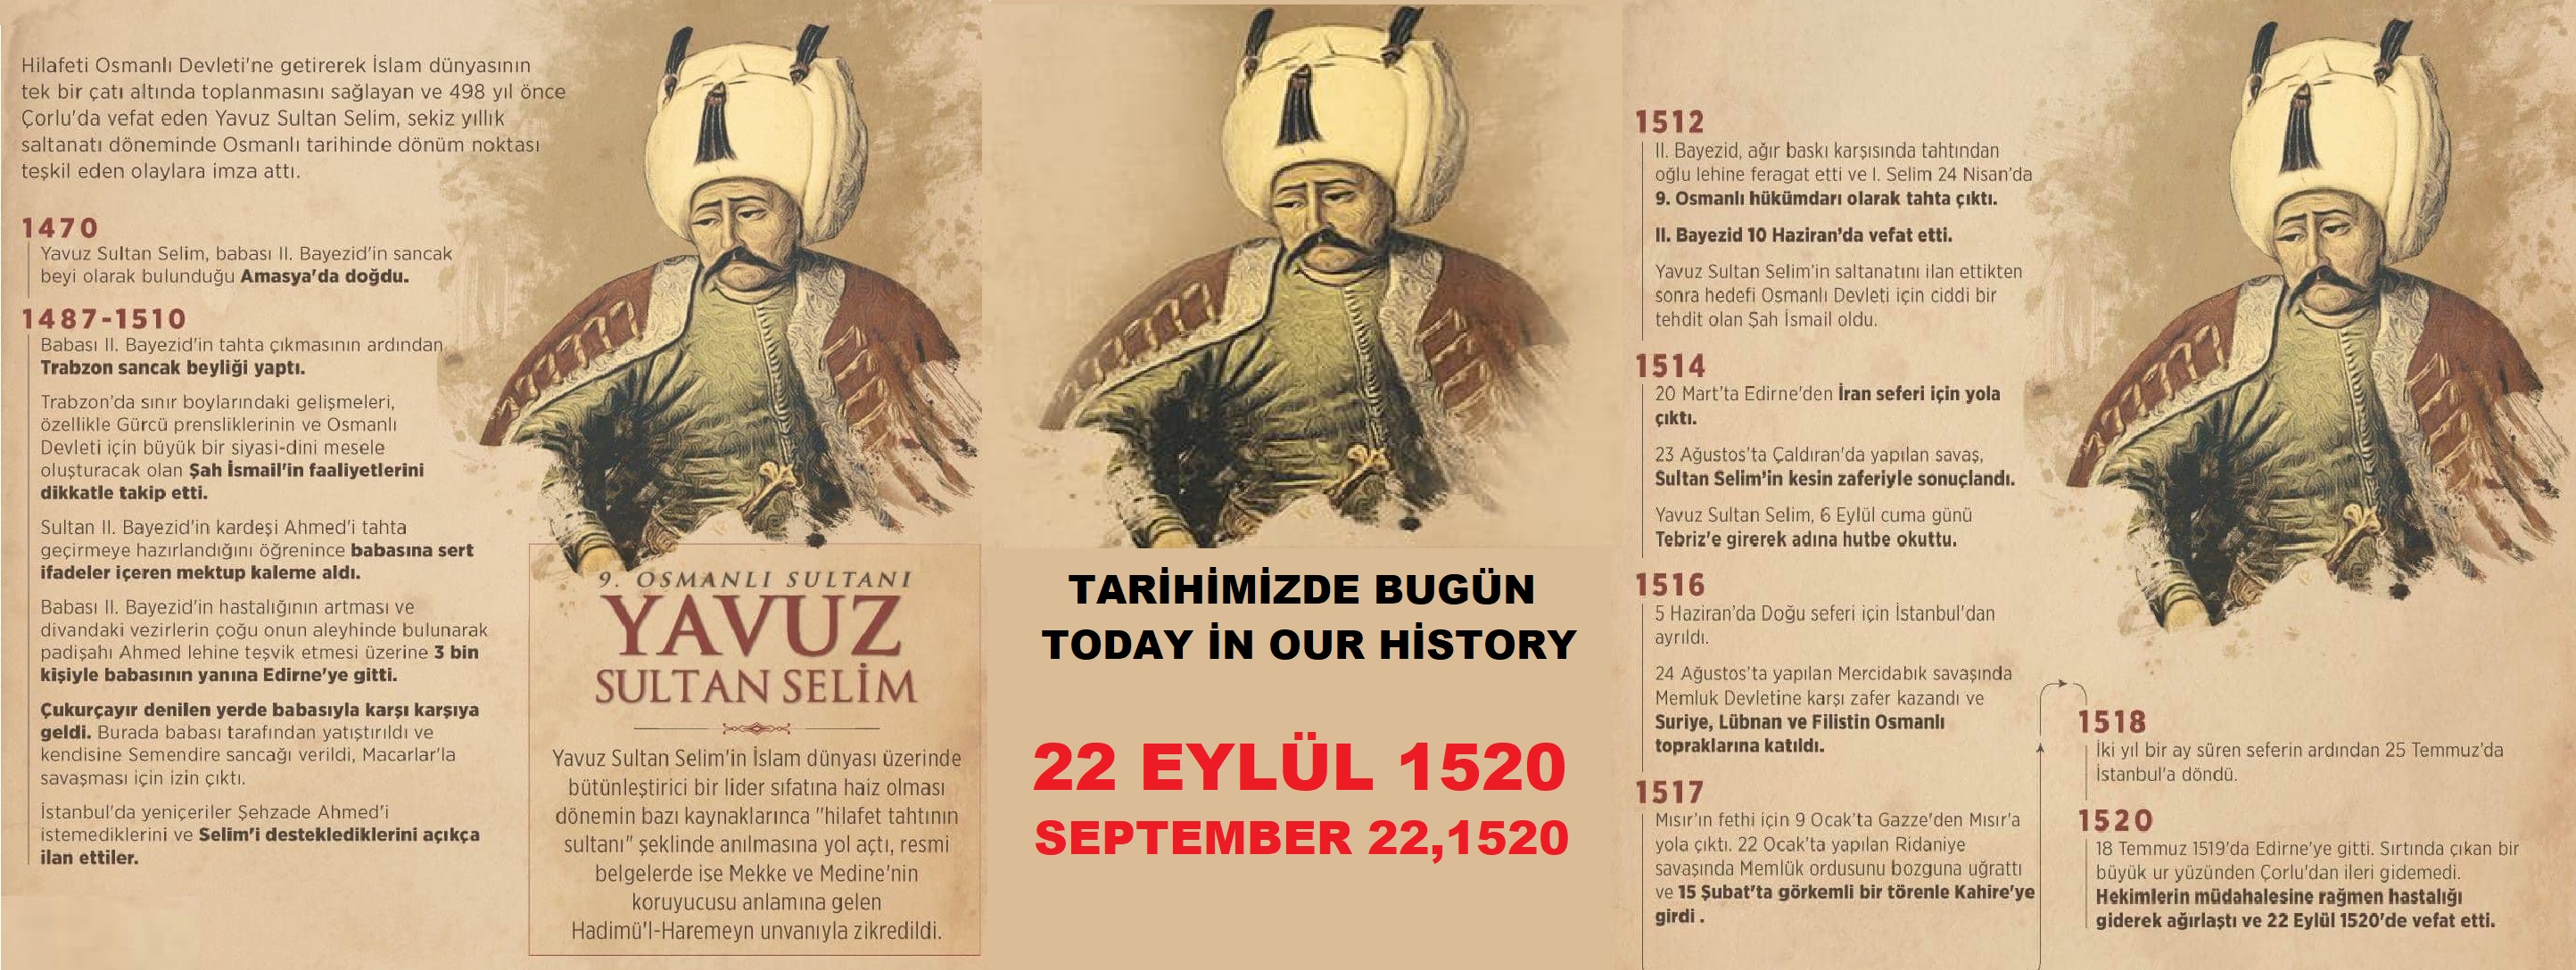 Yavuz_Sultan_Selim_1520-2021.jpg